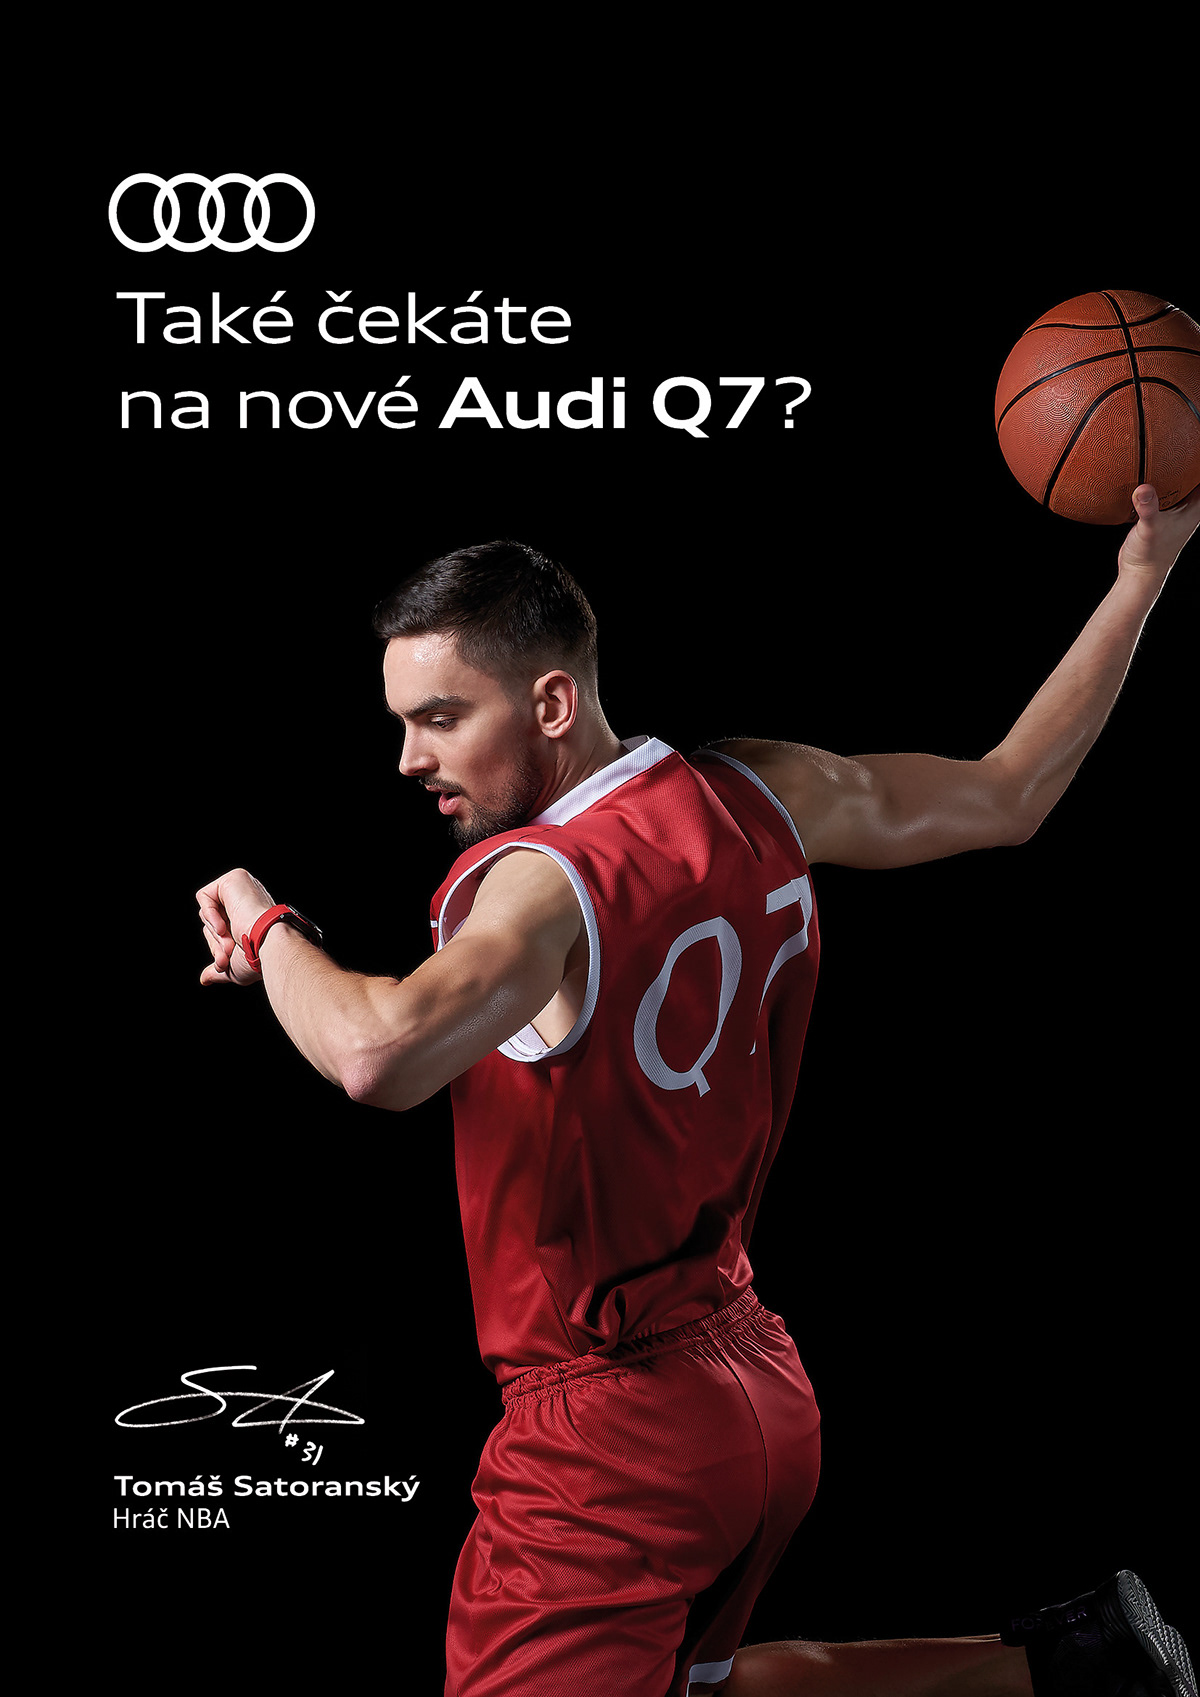 Audi basketball profoto Sony A7 TOMAS SATORANSKY